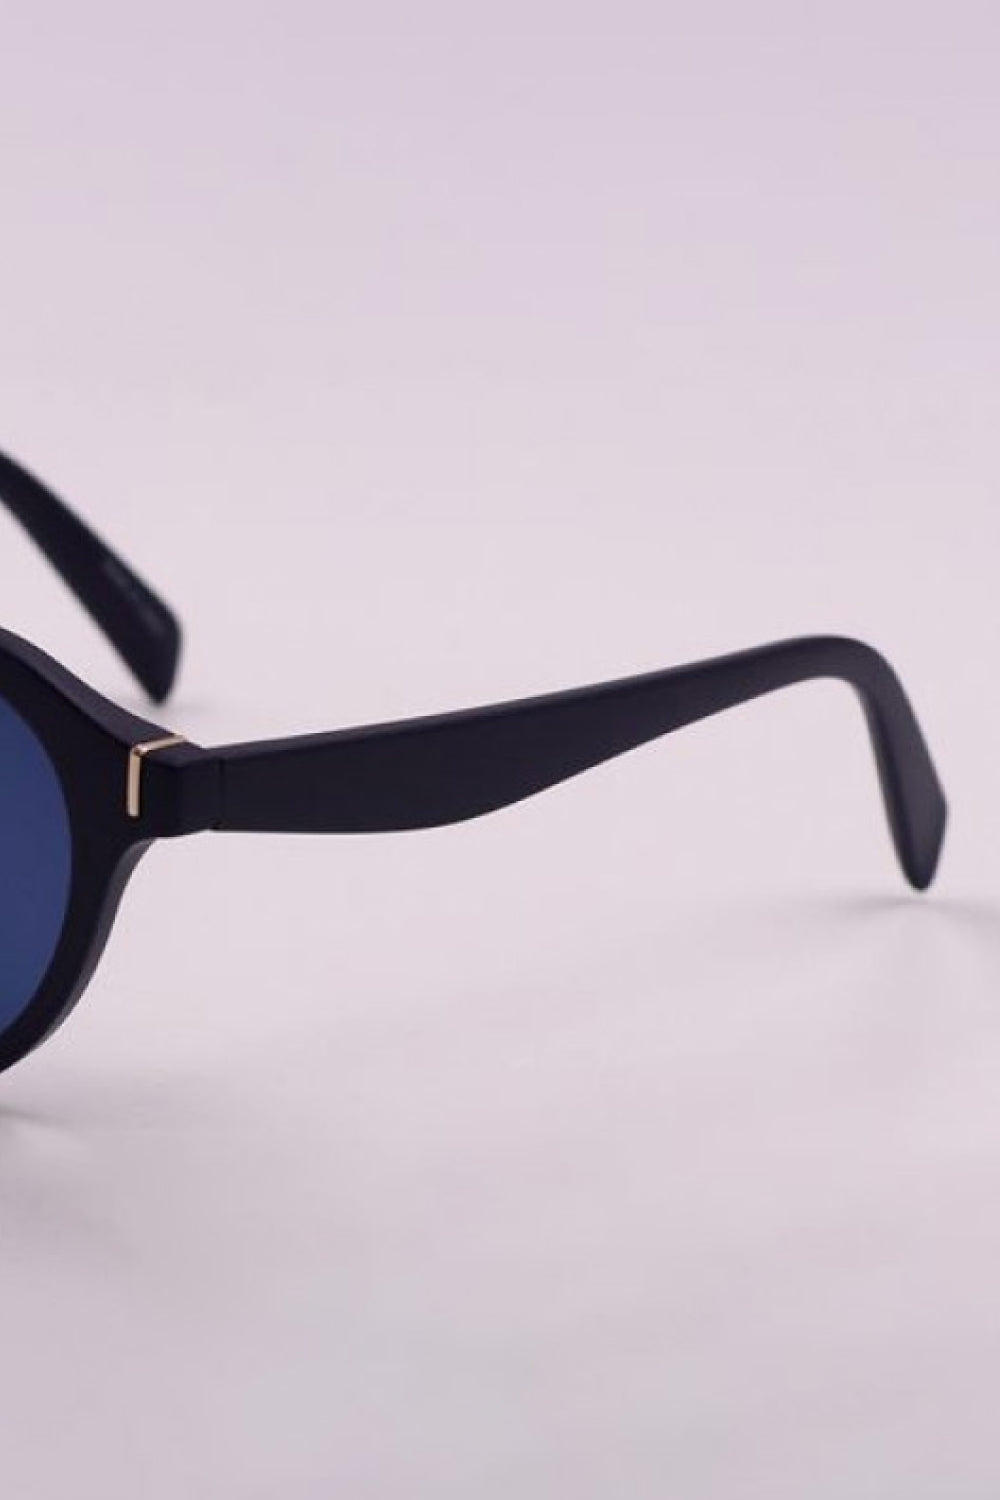 Light Gray 3-Piece Round Polycarbonate Full Rim Sunglasses Sentient Beauty Fashions Apparel & Accessories